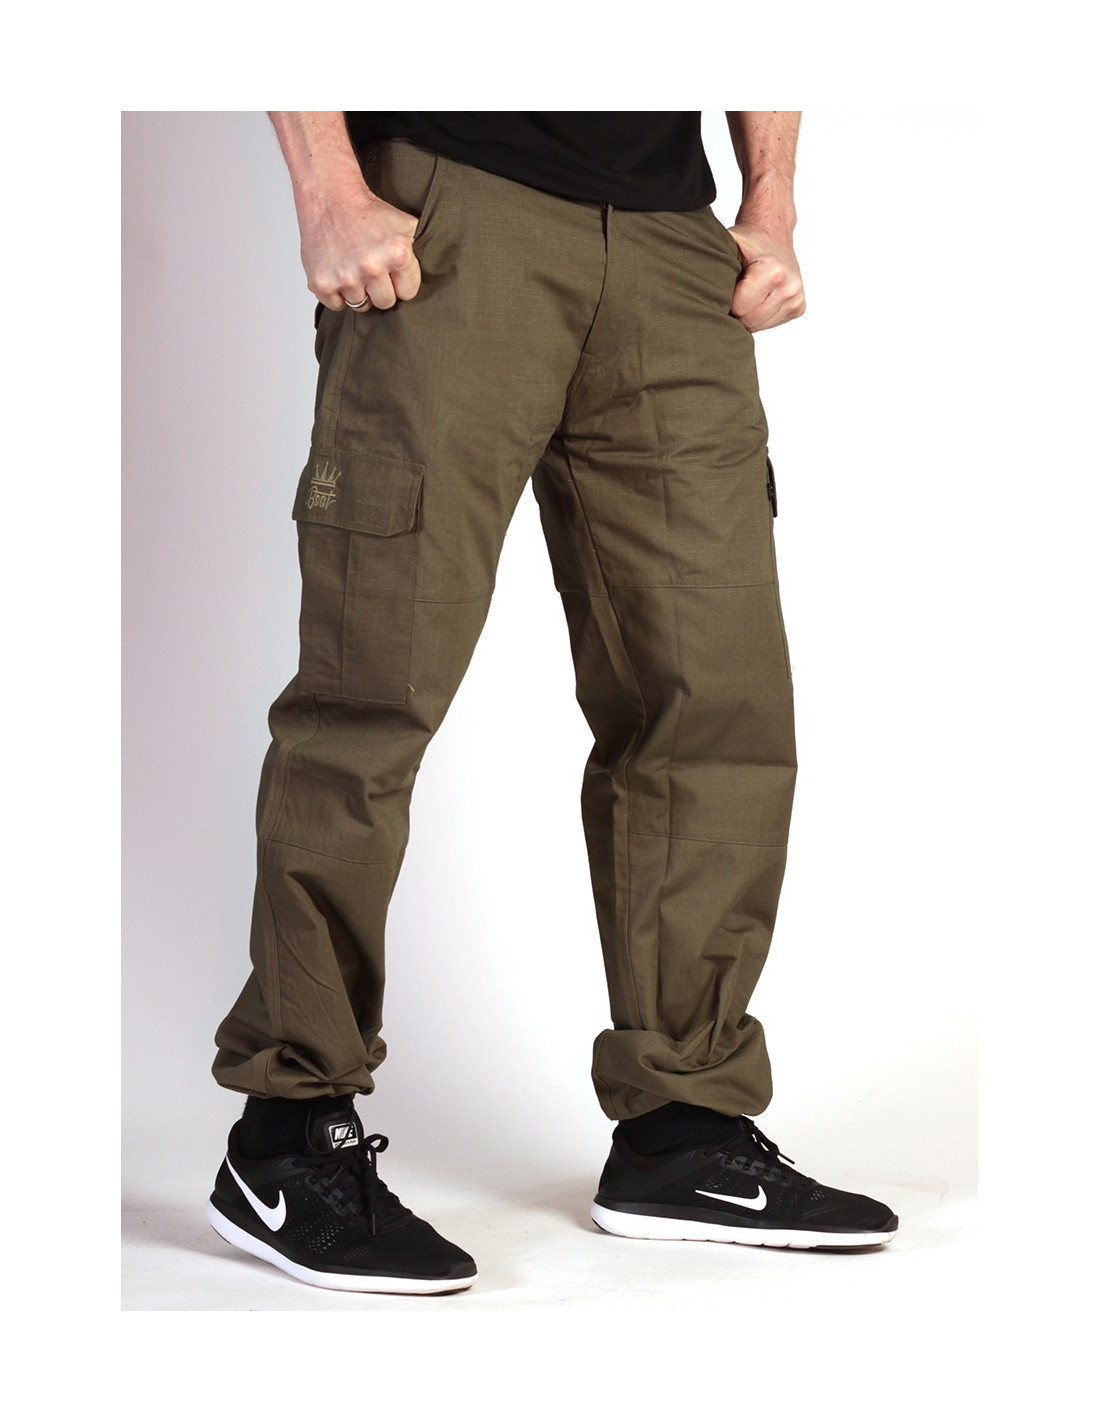 BSAT Regular Fit Combat Cargo Pants Olive Green